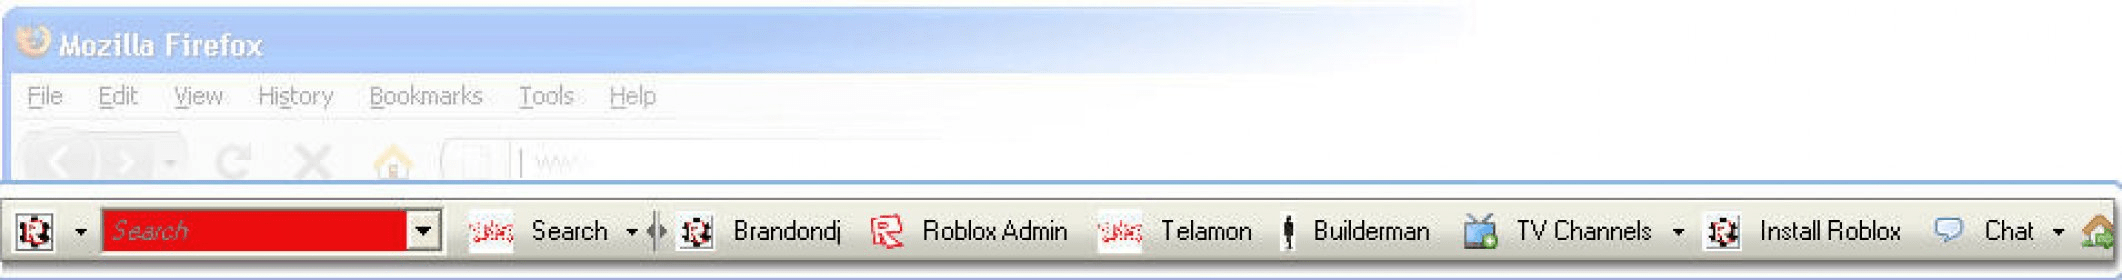 Roblox Admin Toolbar 6 3 Download Free